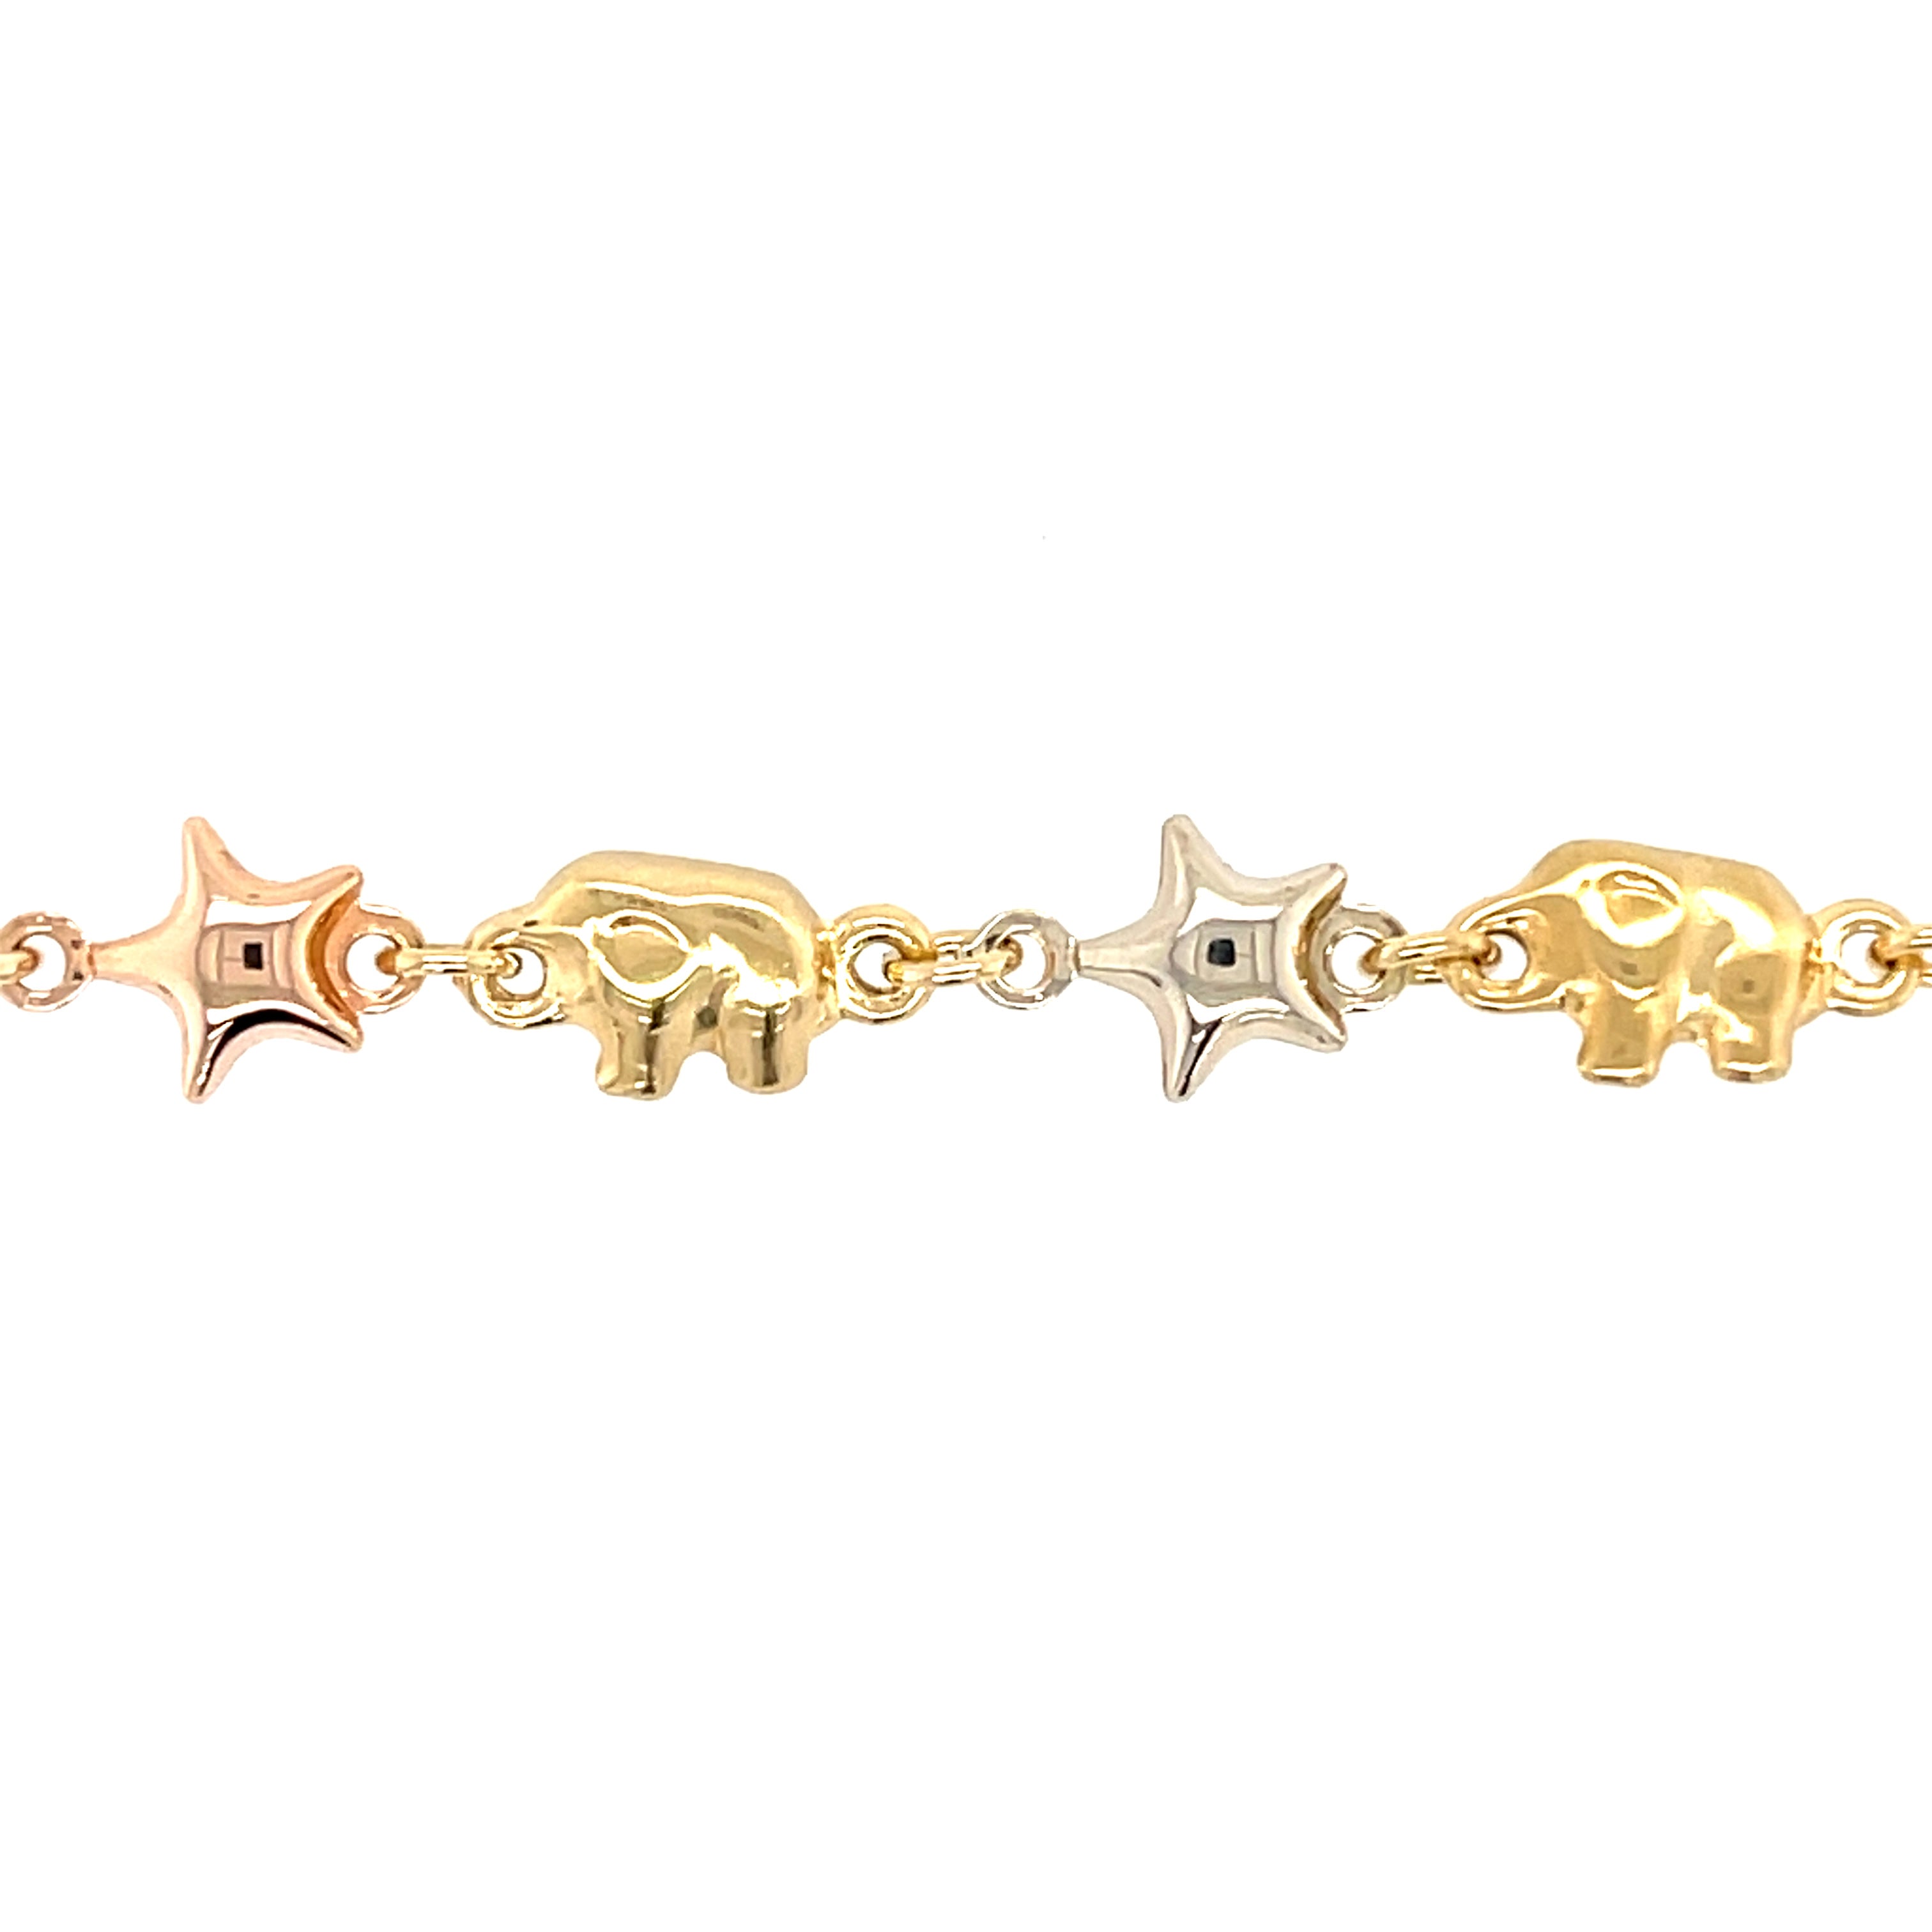 18ct Yellow, White & Rose Gold 7" Elephants Bracelet SOLD